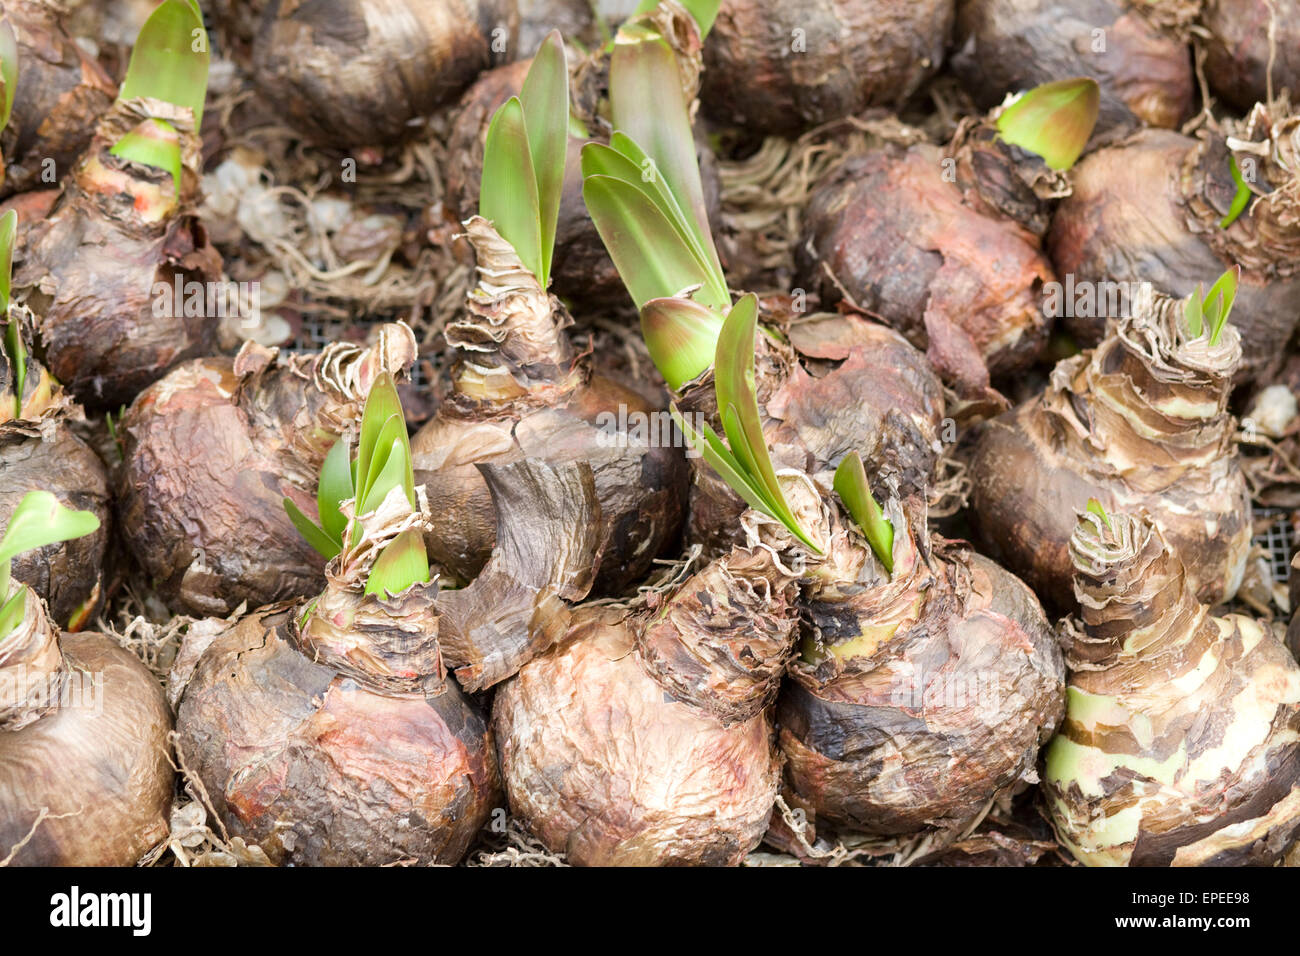 Amaryllis Bulbs on sale at a Dutch market stall Stock Photo